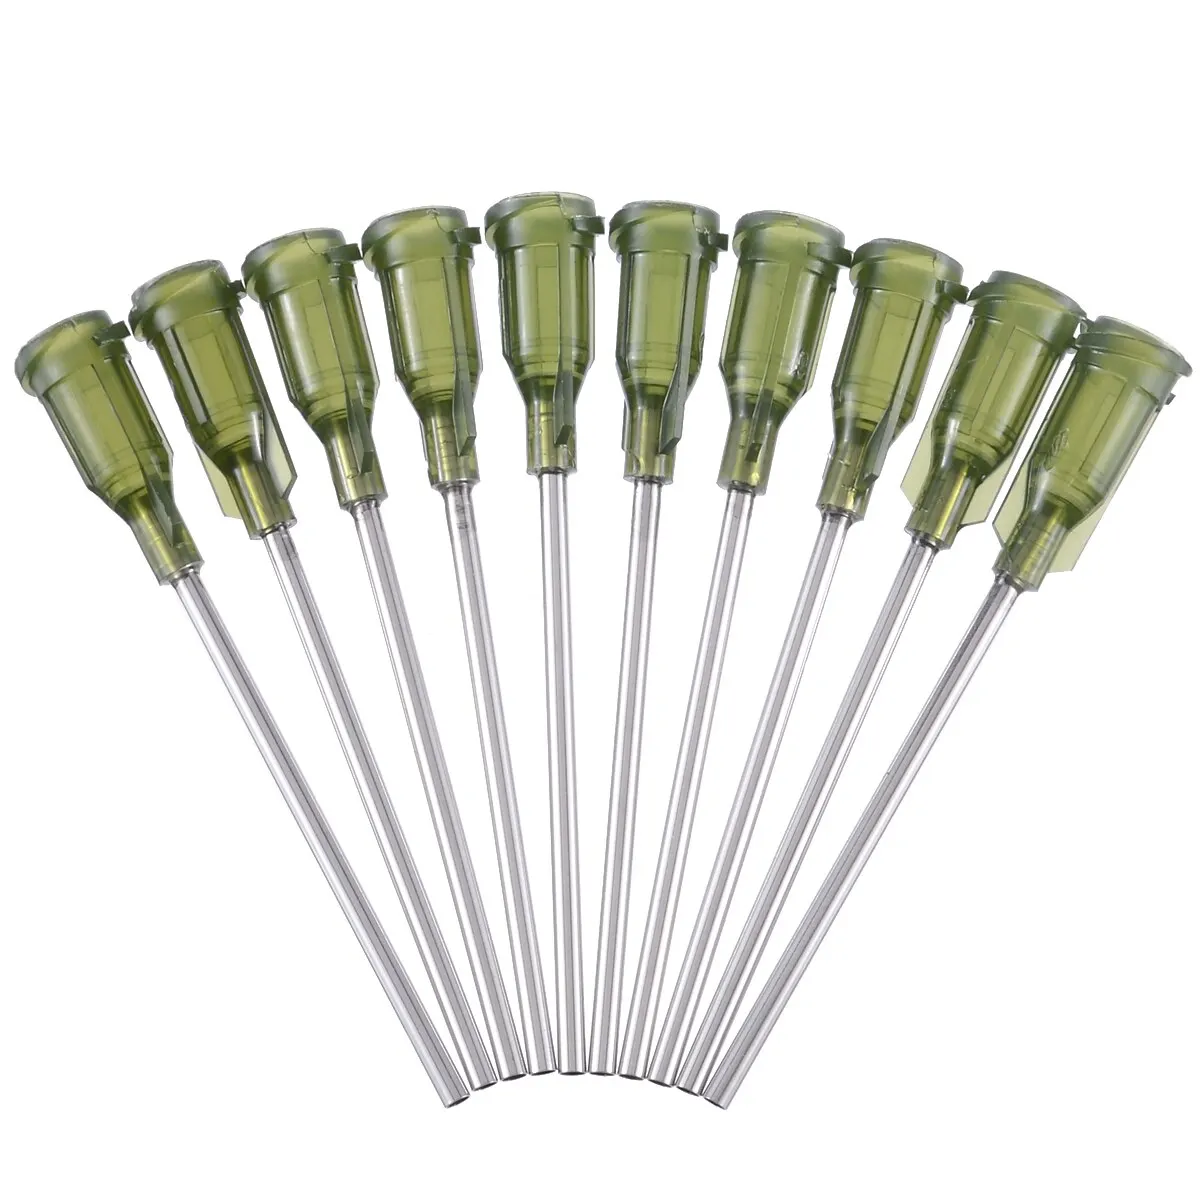 

20pcs/set Blunt Dispensing Needles Syringe Tip Needle 1.5" 14 Gauge Luer Lock for Mixing Many Liquid